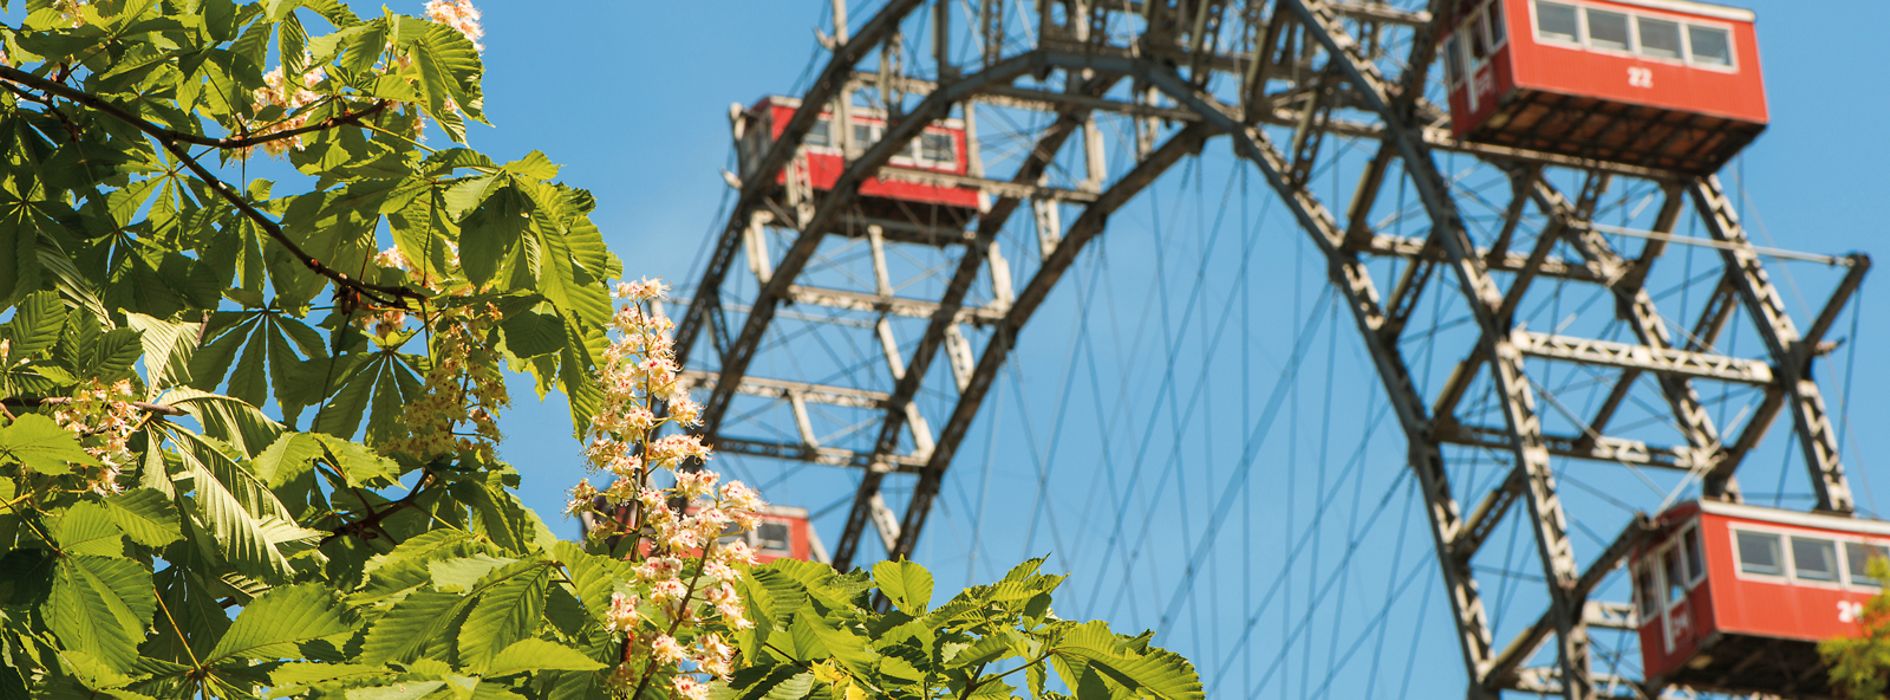  Vienna Prater with Giant Ferris Wheel 